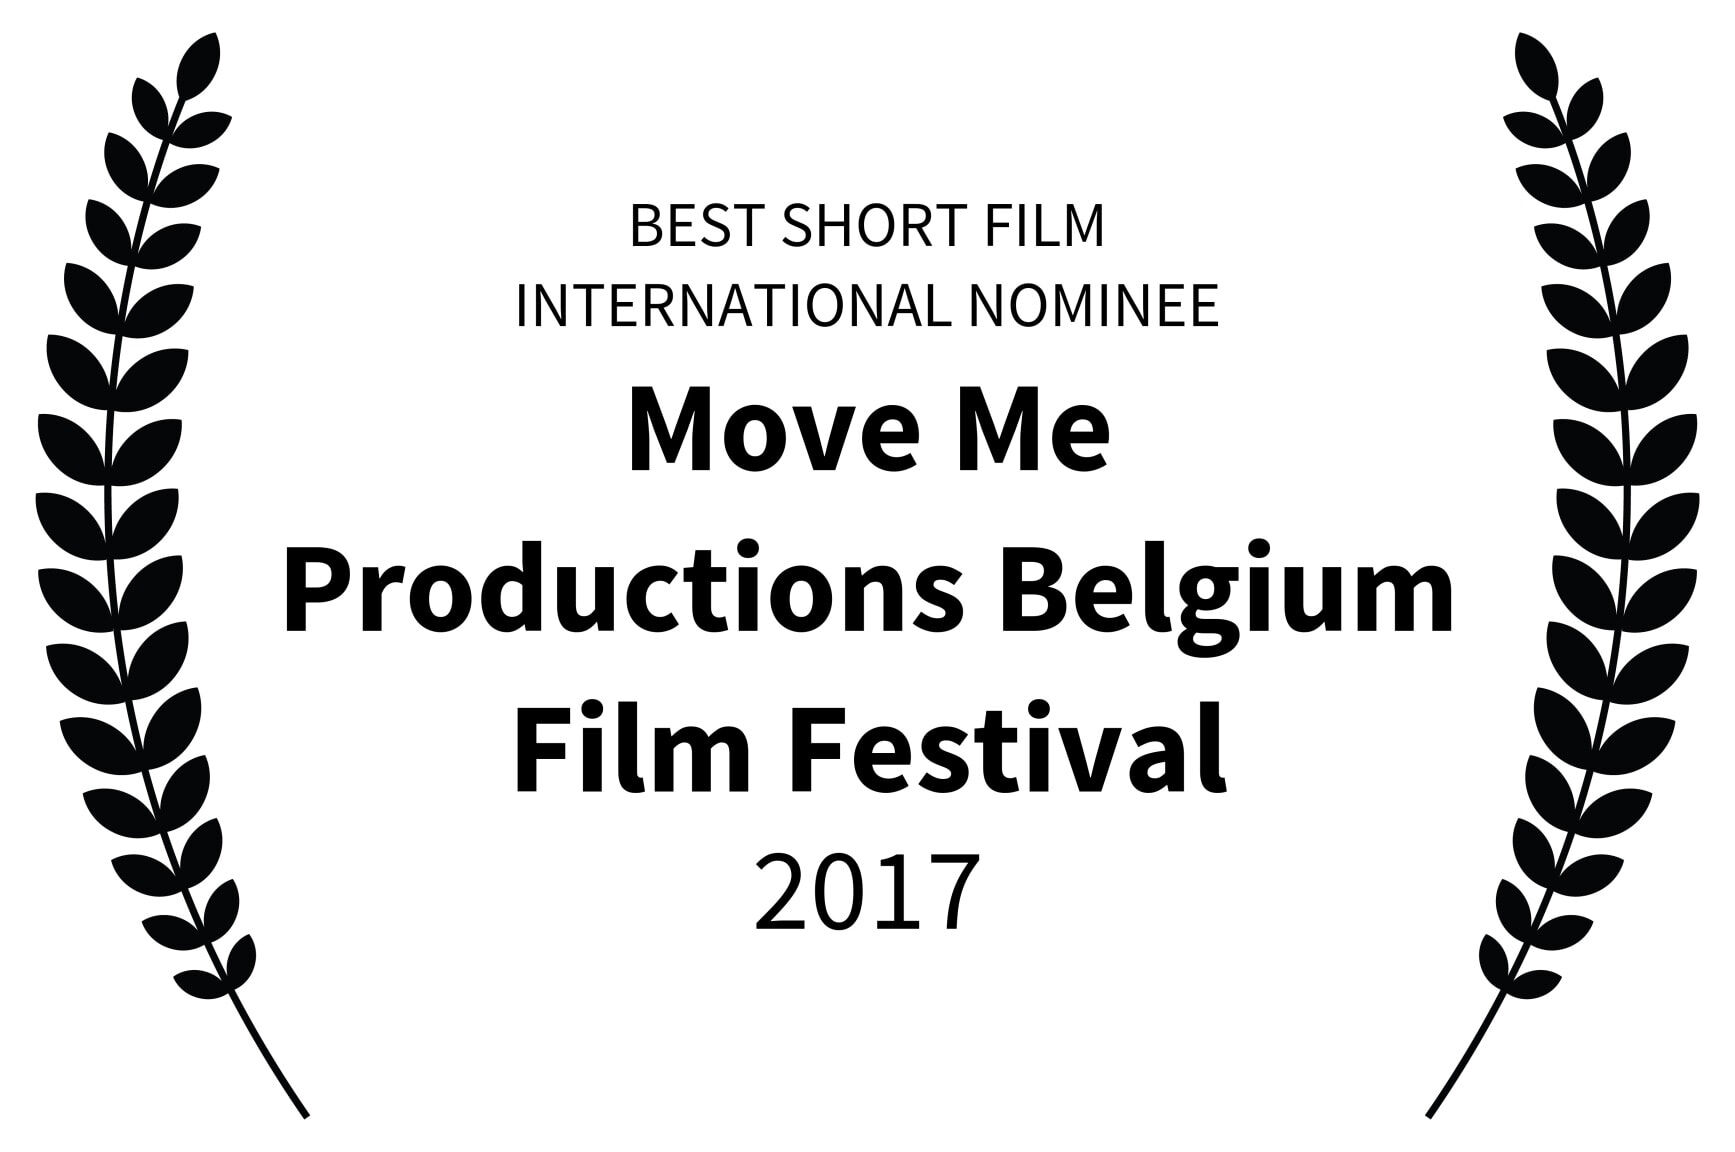 BEST SHORT FILM INTERNATIONAL NOMINEE - Move Me Productions Belgium Film Festival - 2017